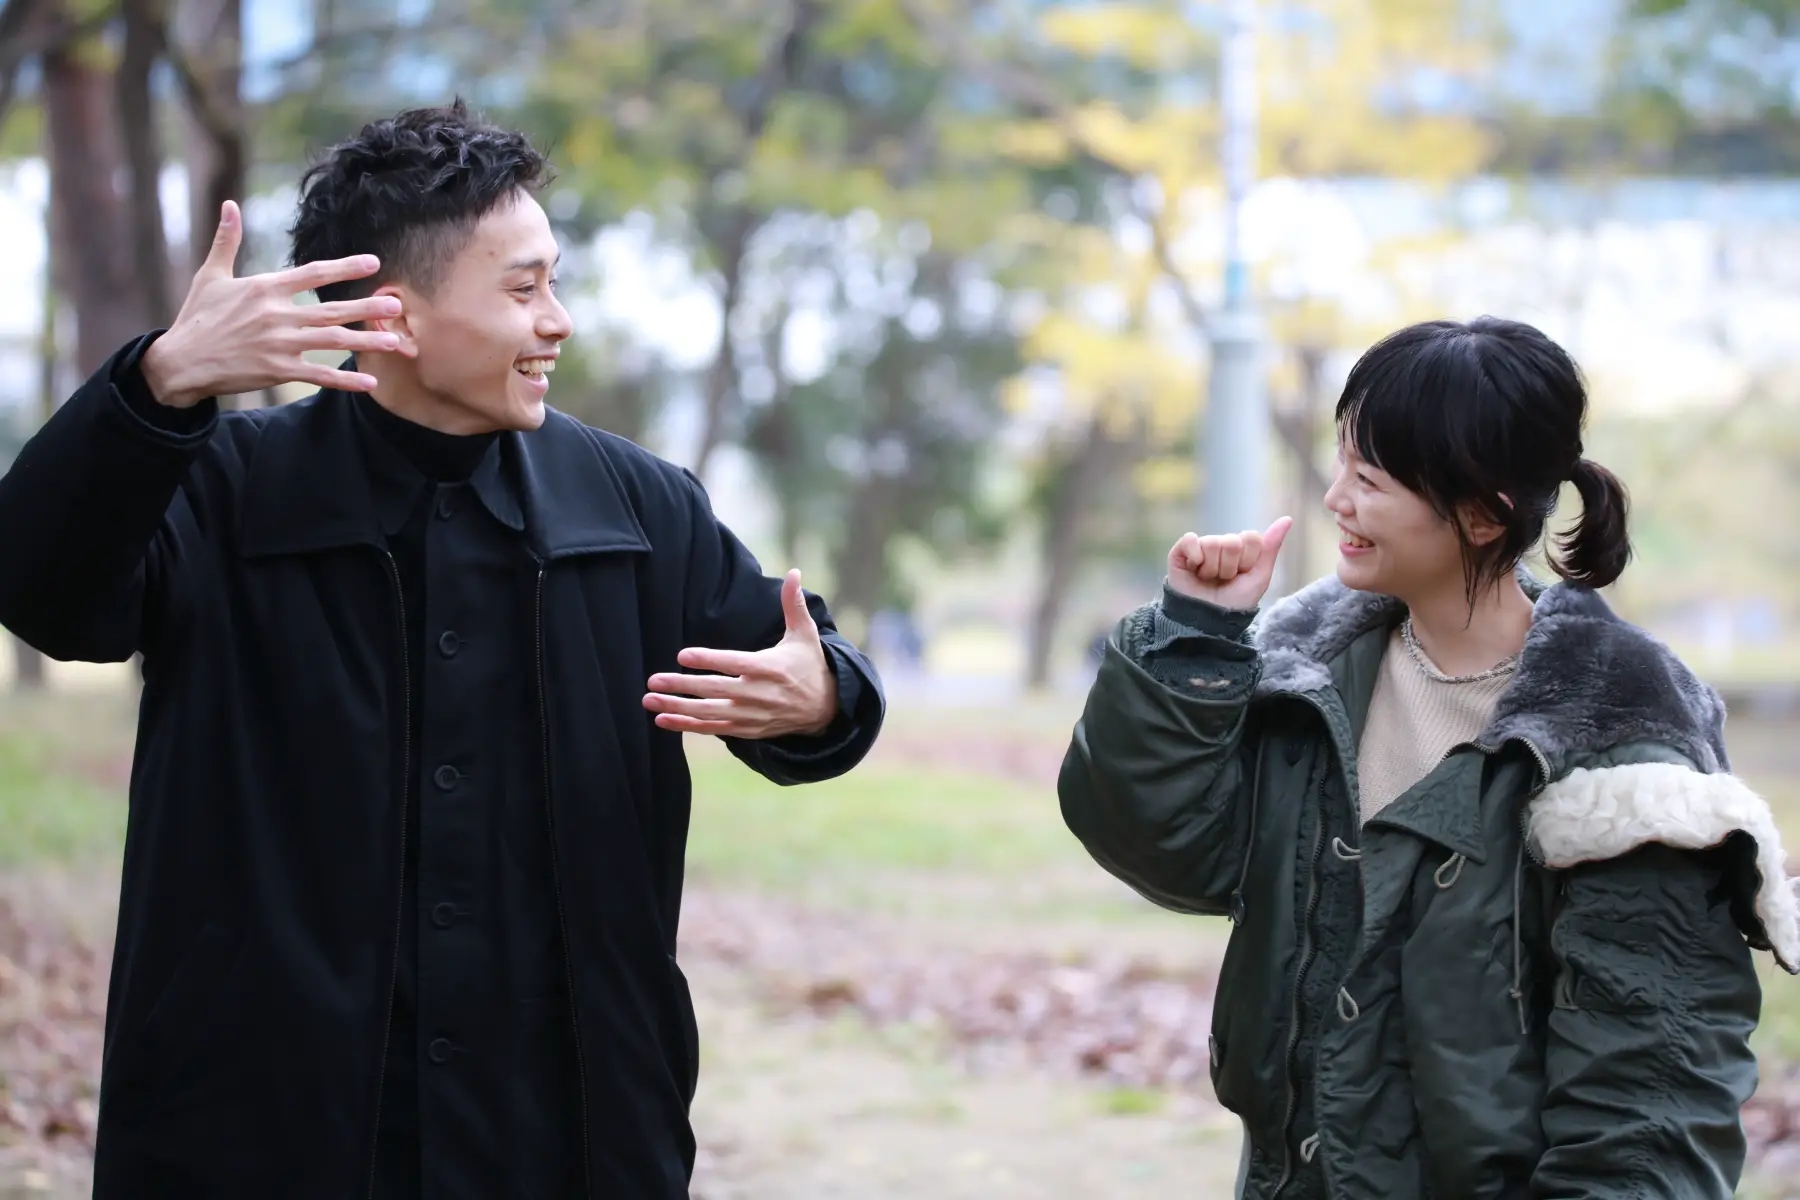 Smiling couple communicates in Japanese sign language